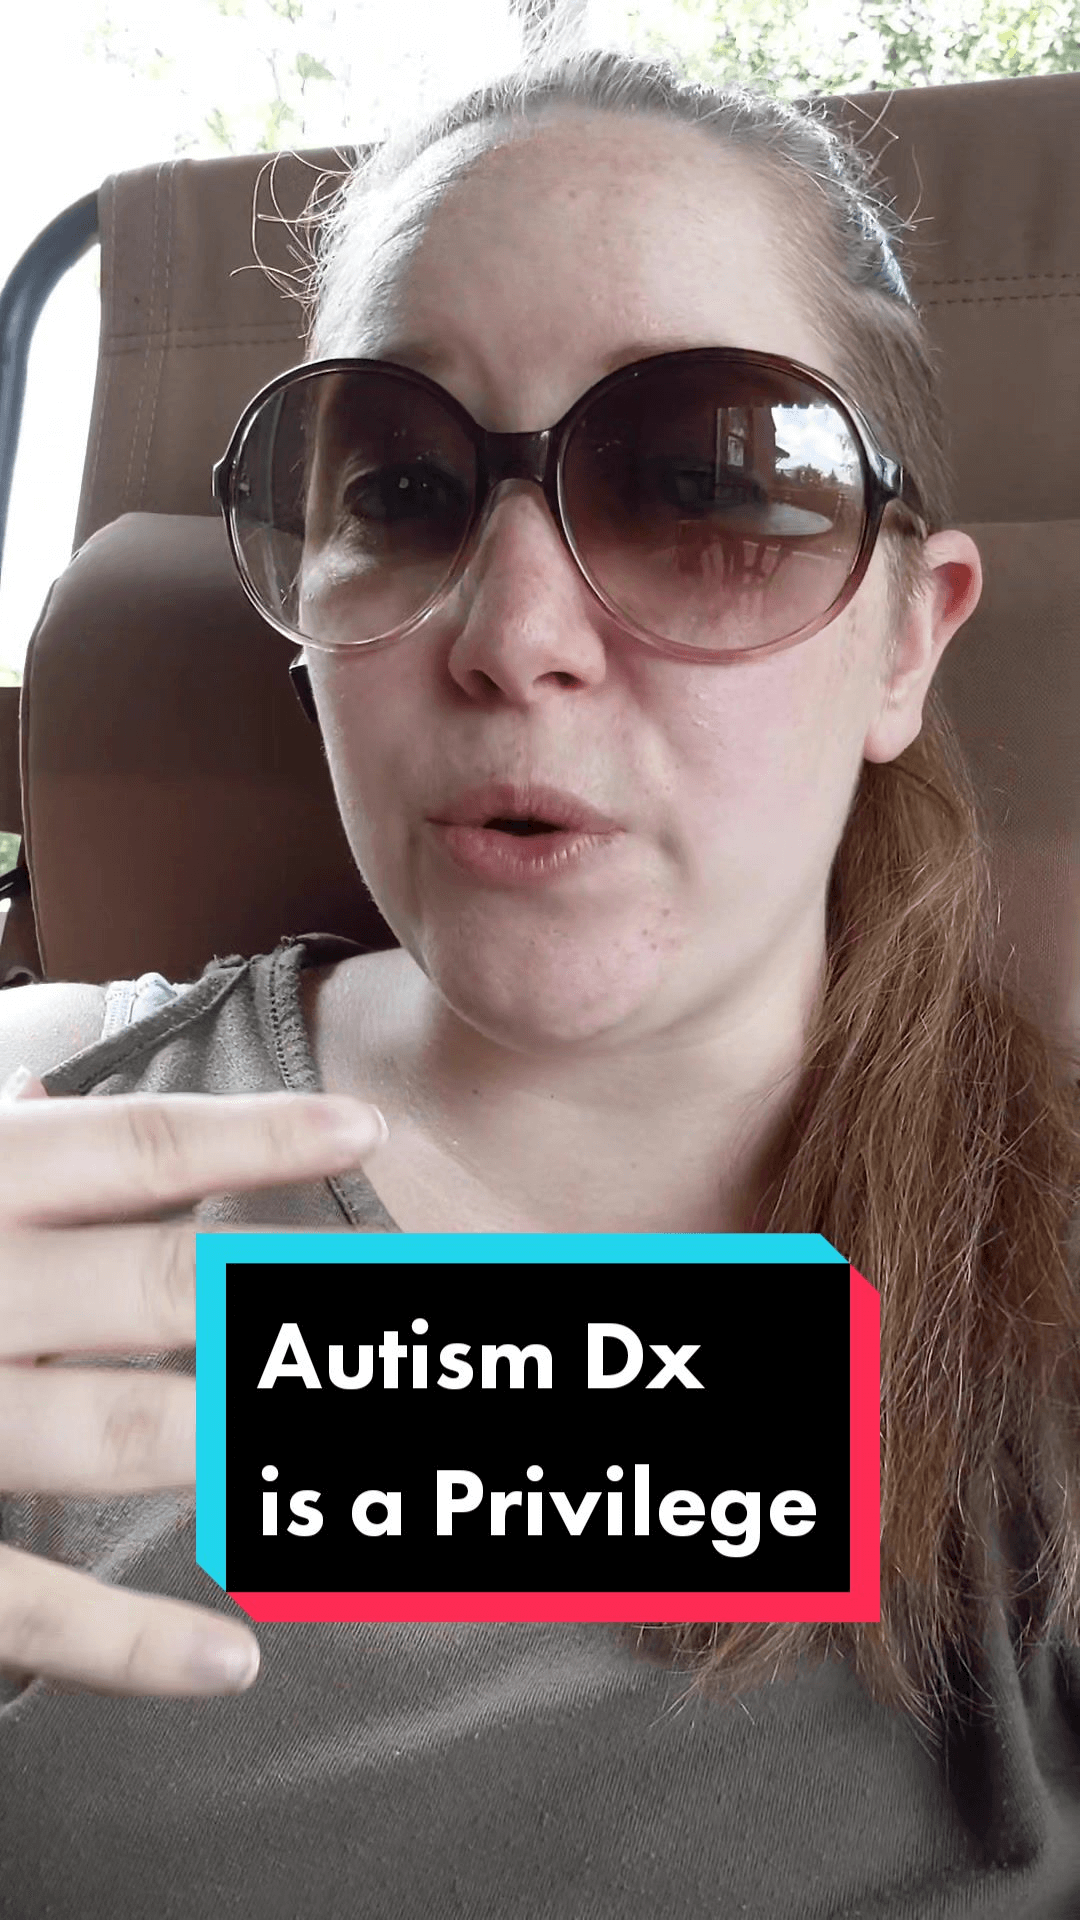 Watch Autism DX is a privilege